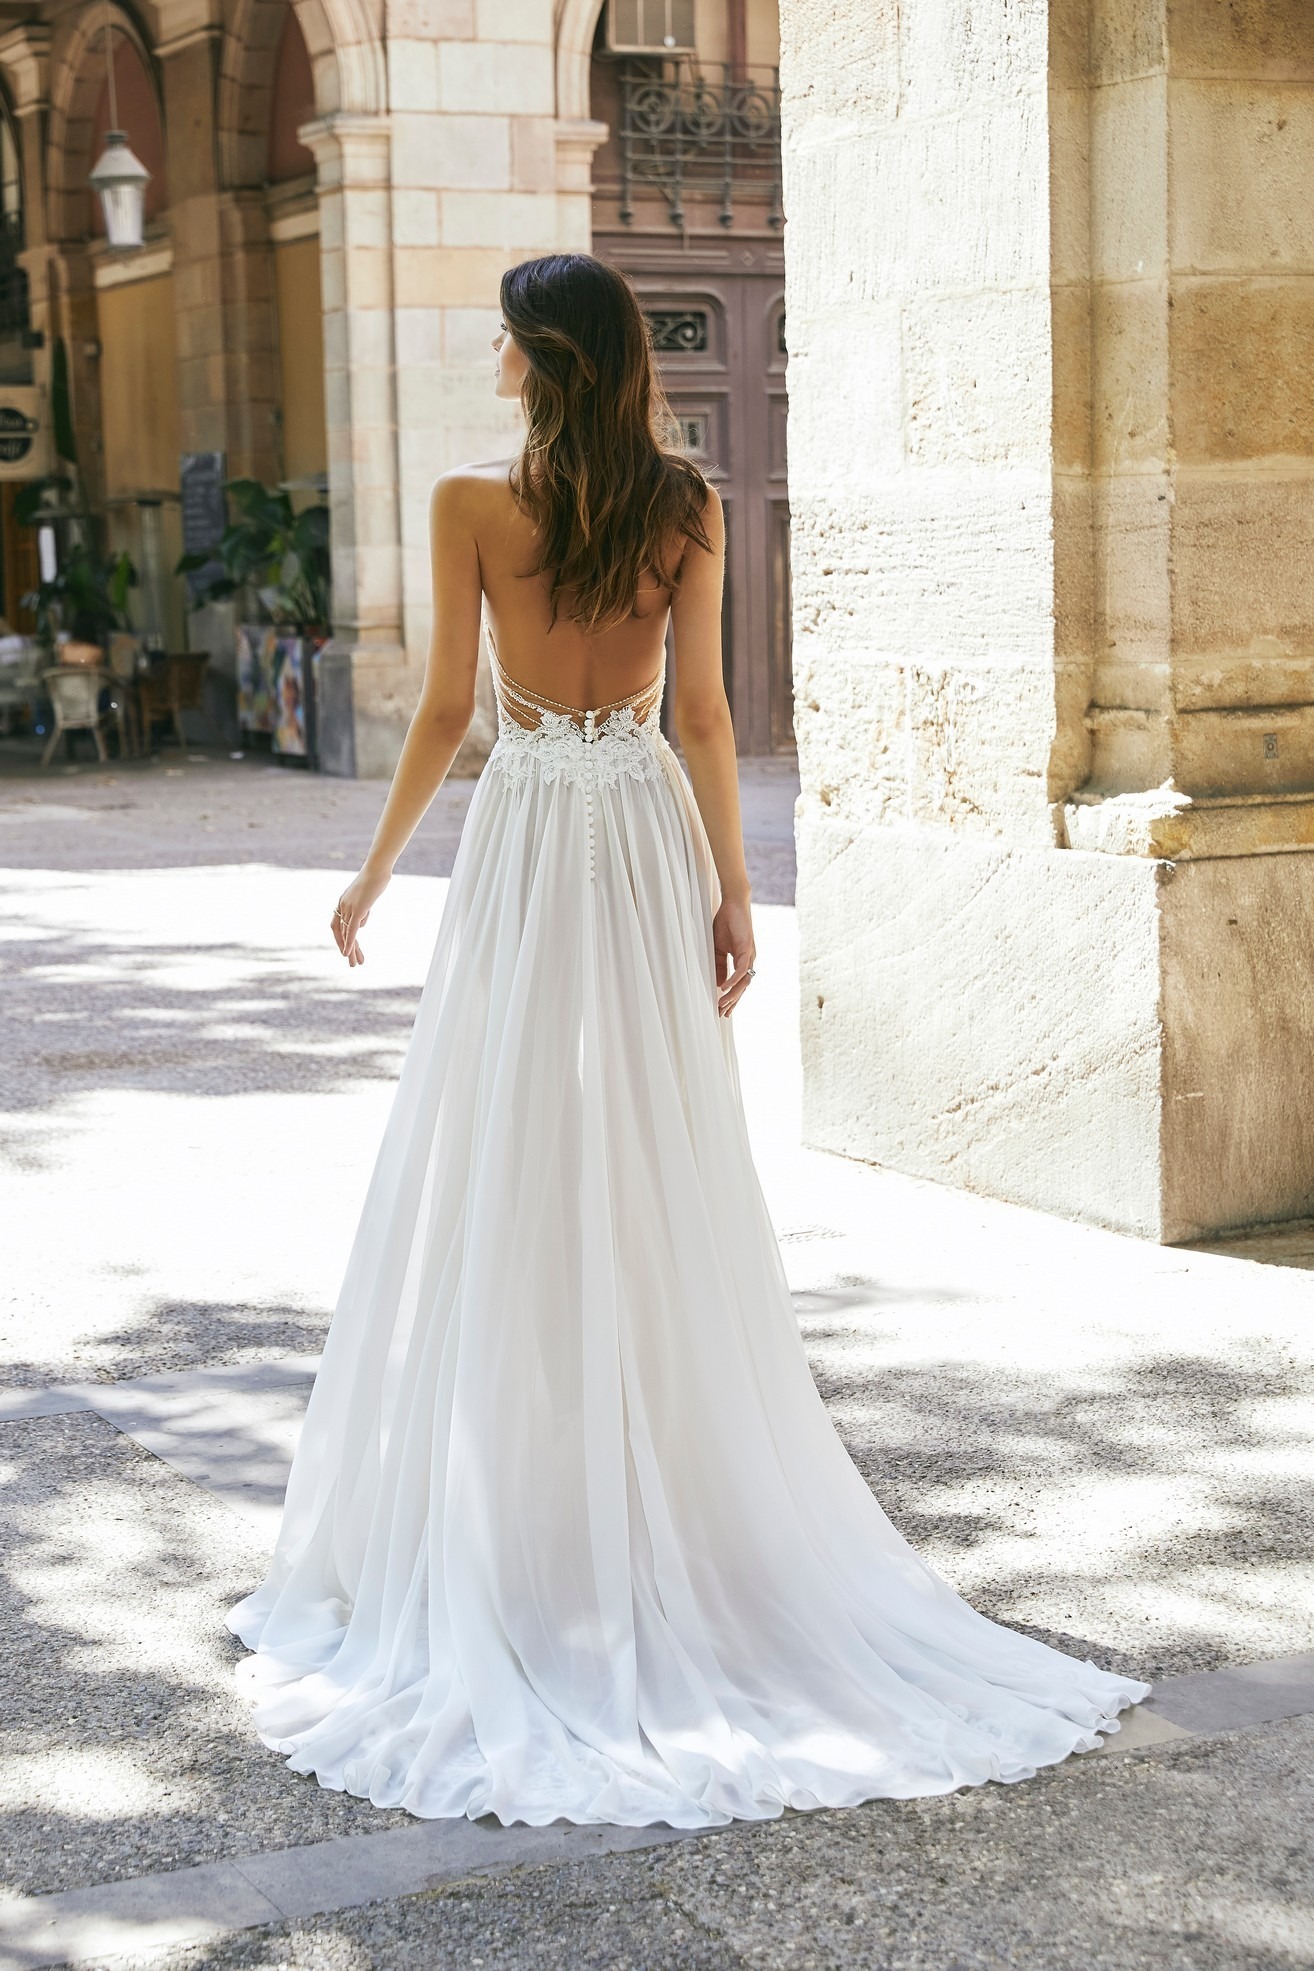 Popsie Wedding Dress Victoria Jane Sardegna - Atelier La Parigina Cagliari